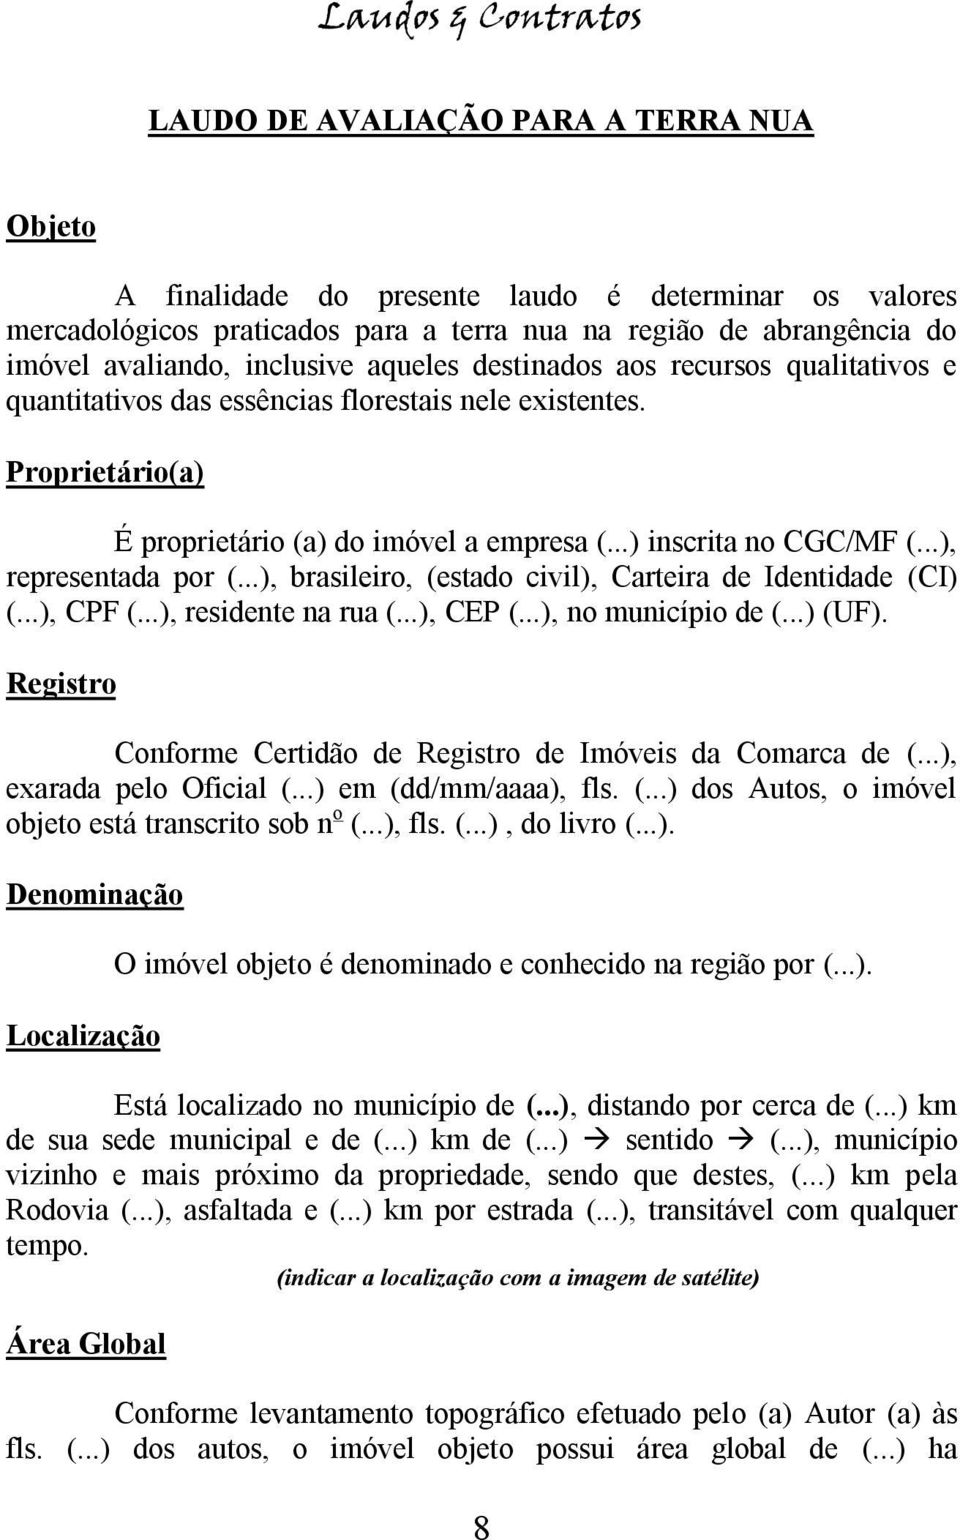 ..), representada por (...), brasileiro, (estado civil), Carteira de Identidade (CI) (...), CPF (...), residente na rua (...), CEP (...), no município de (...) (UF).